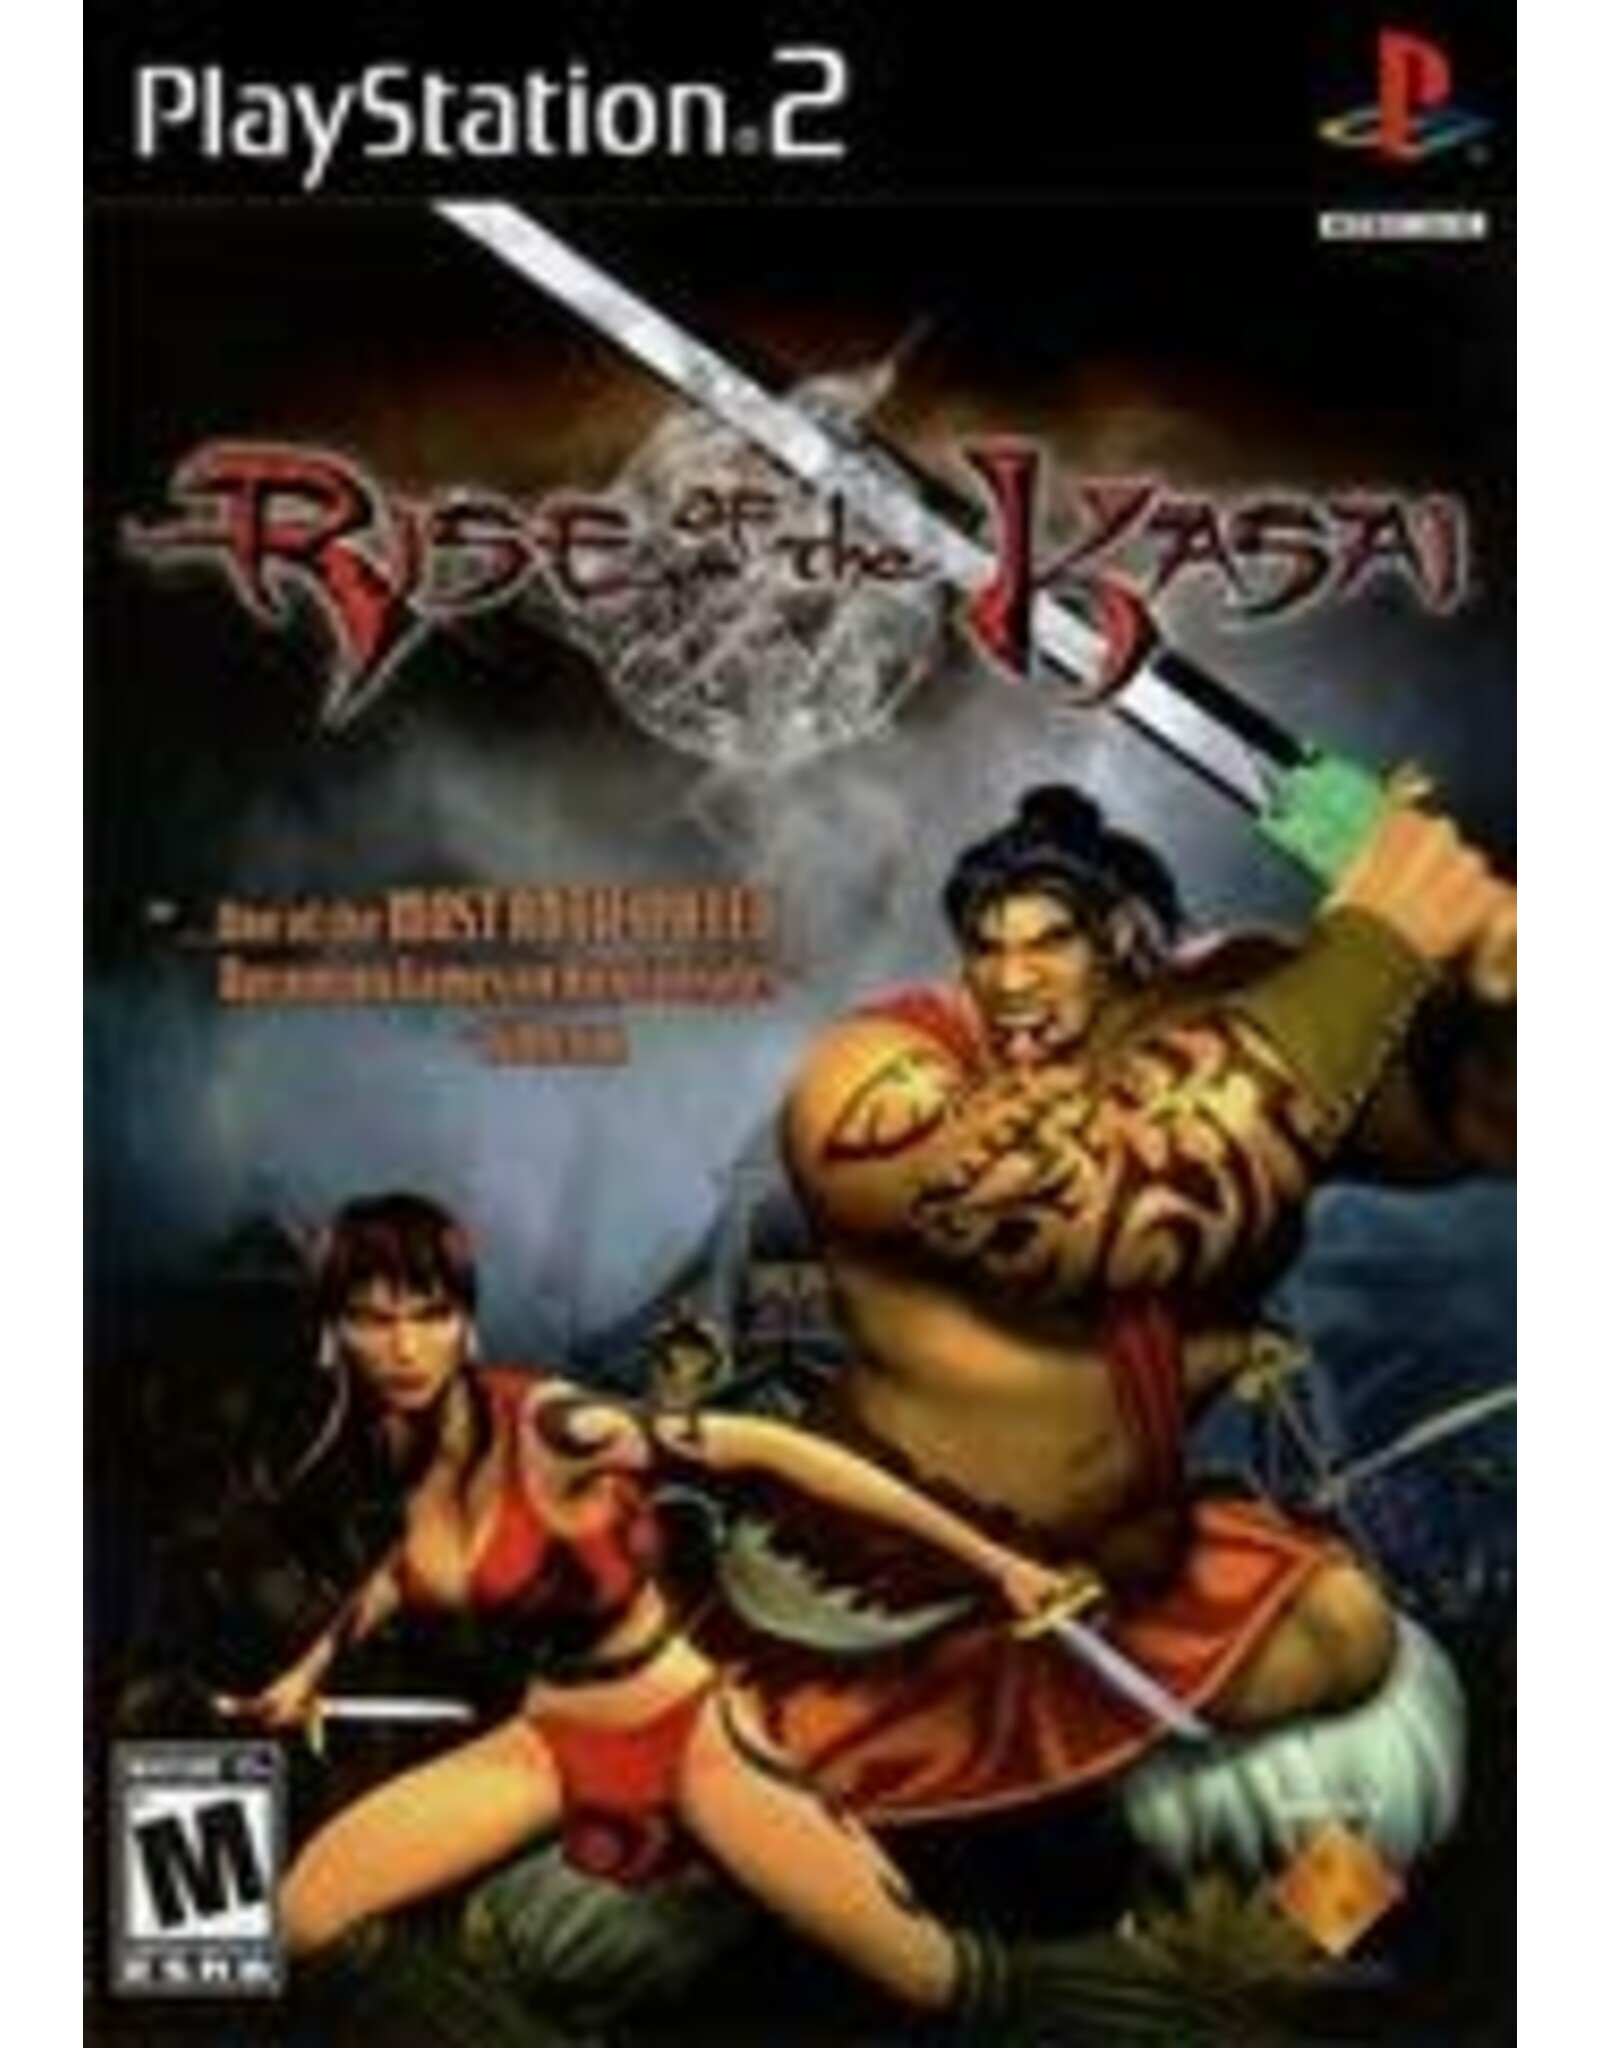 Playstation 2 Rise of the Kasai (CiB)